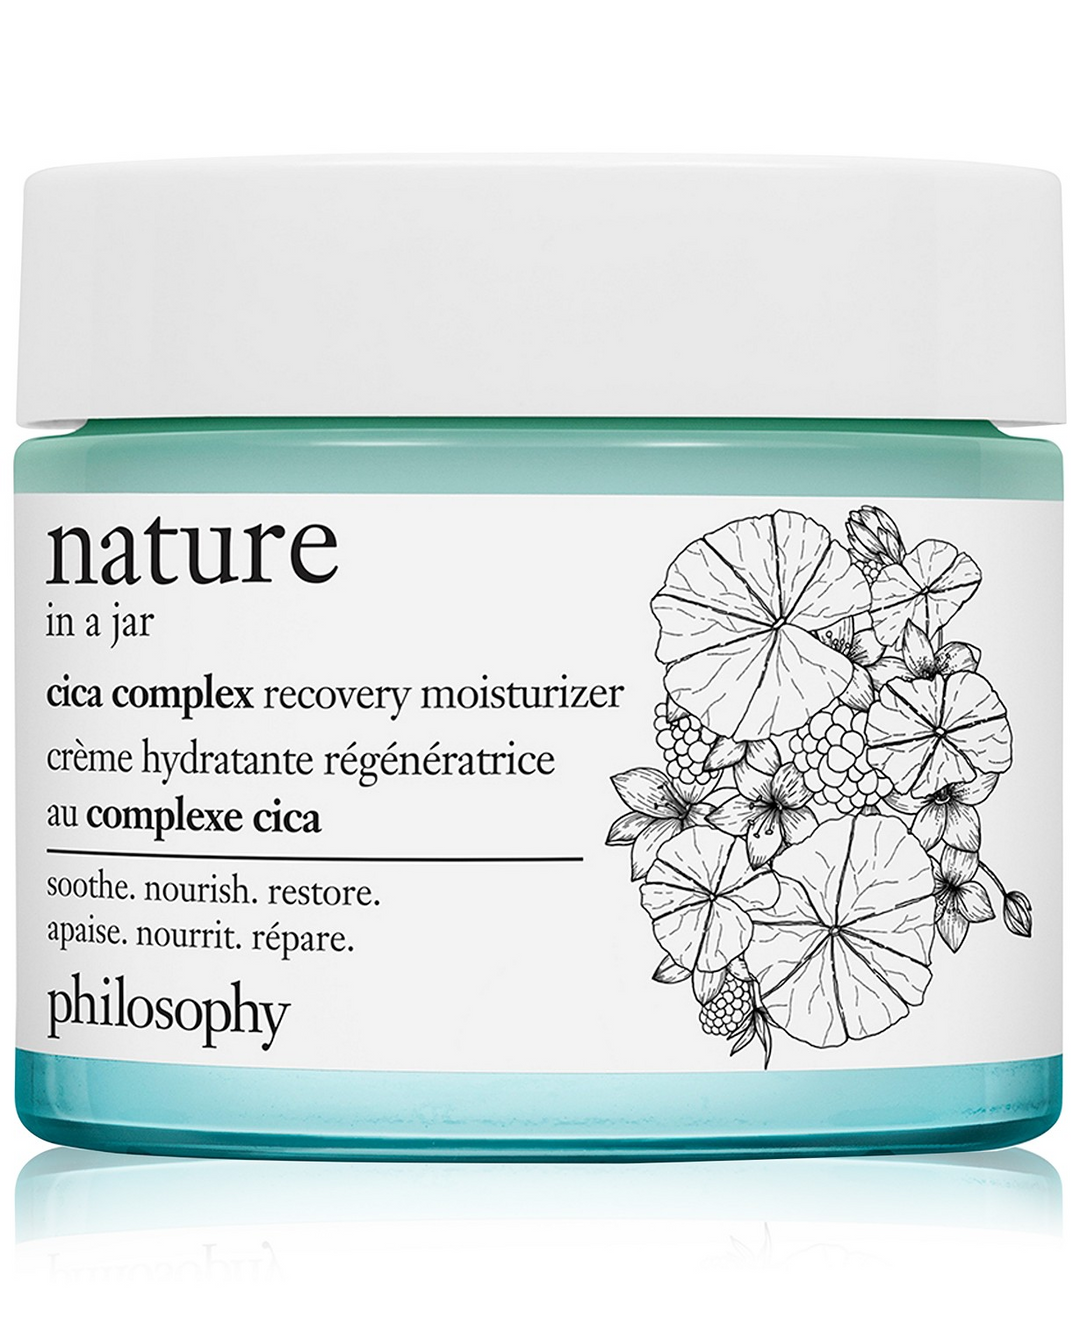 Nature in a jar - Cica complex recovery moisturizer.